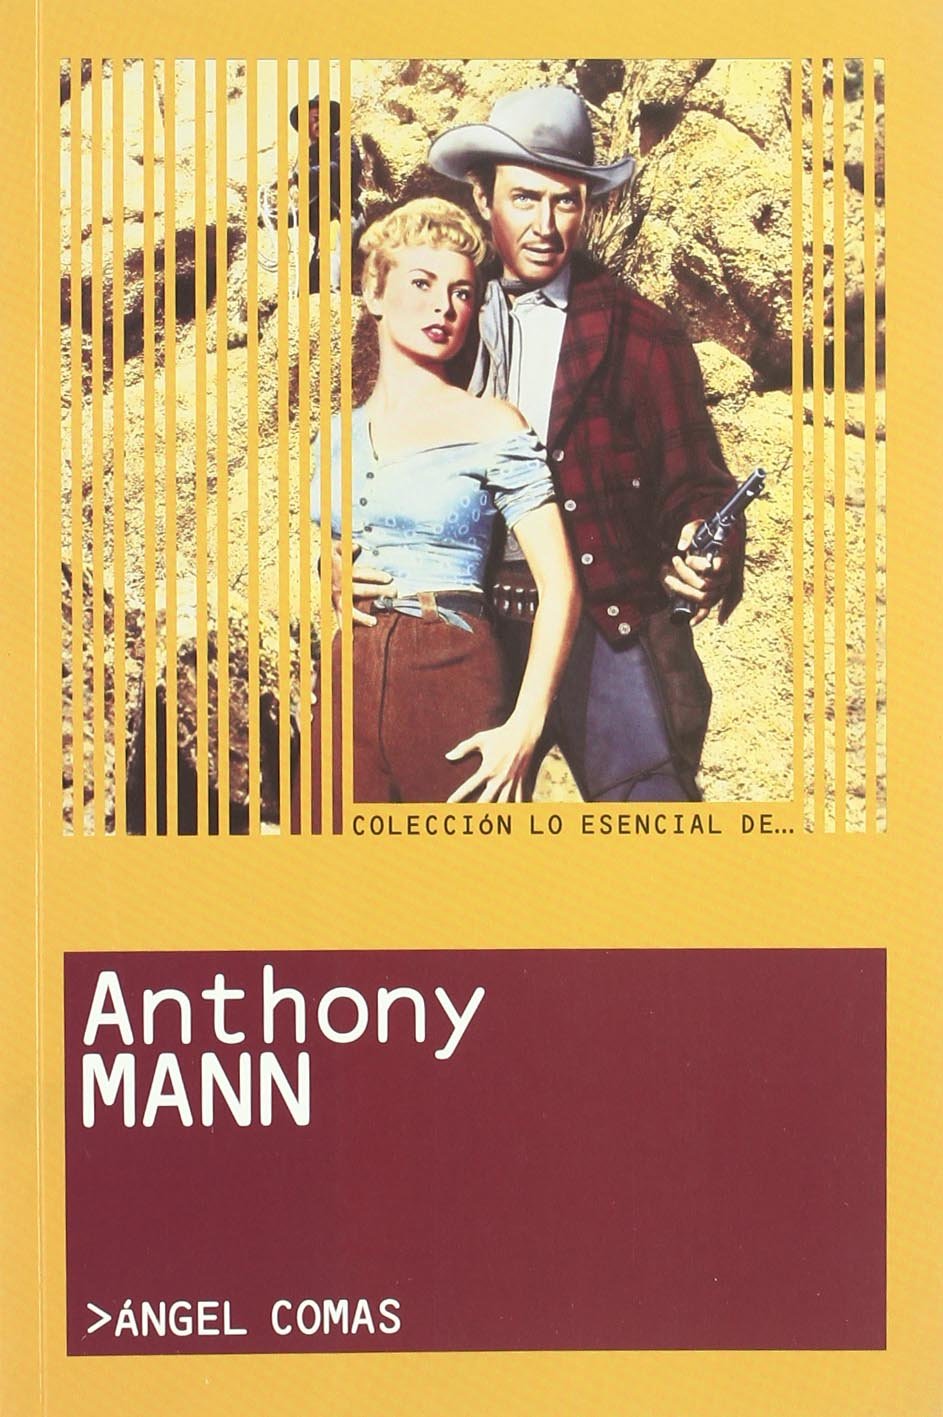 Libro: Anthony Mann por Ángel Comas